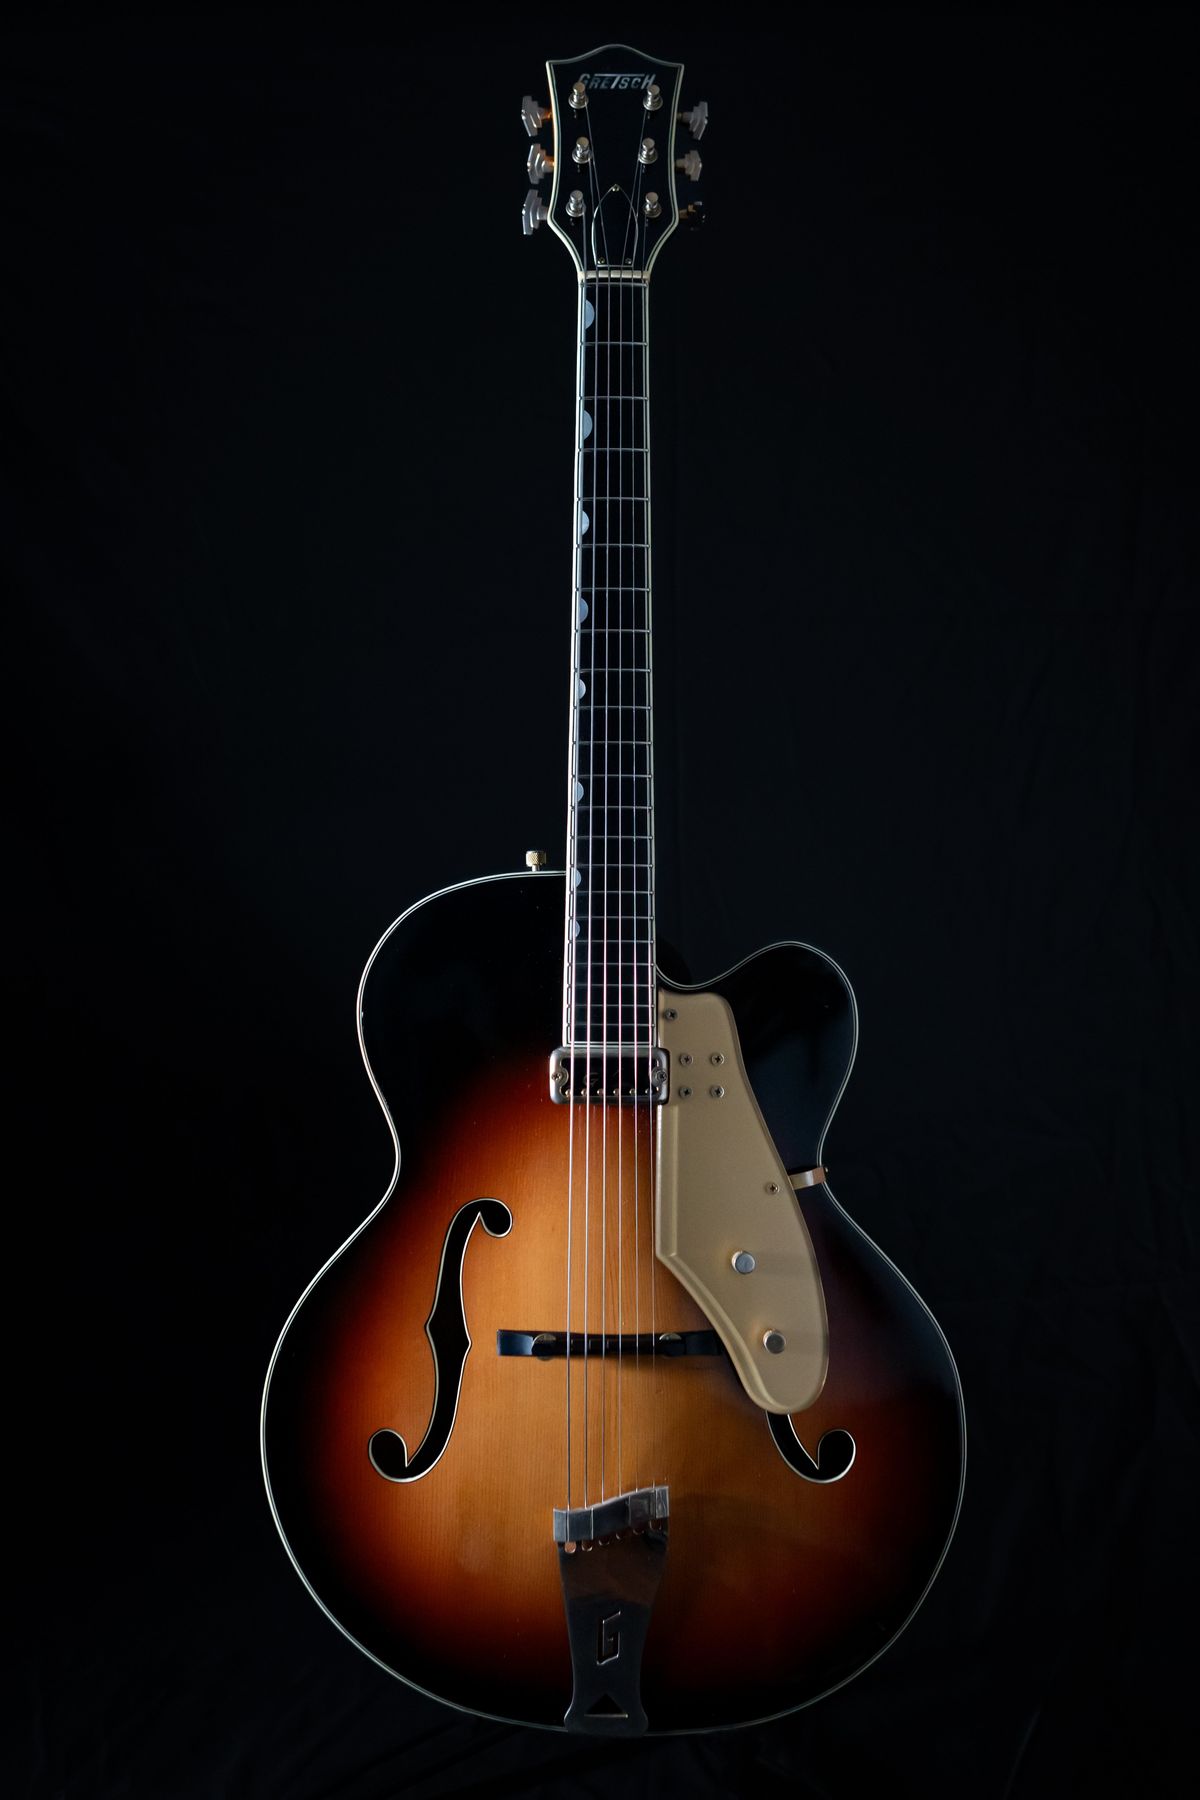 Vintage '50s Gretsch electric guitar